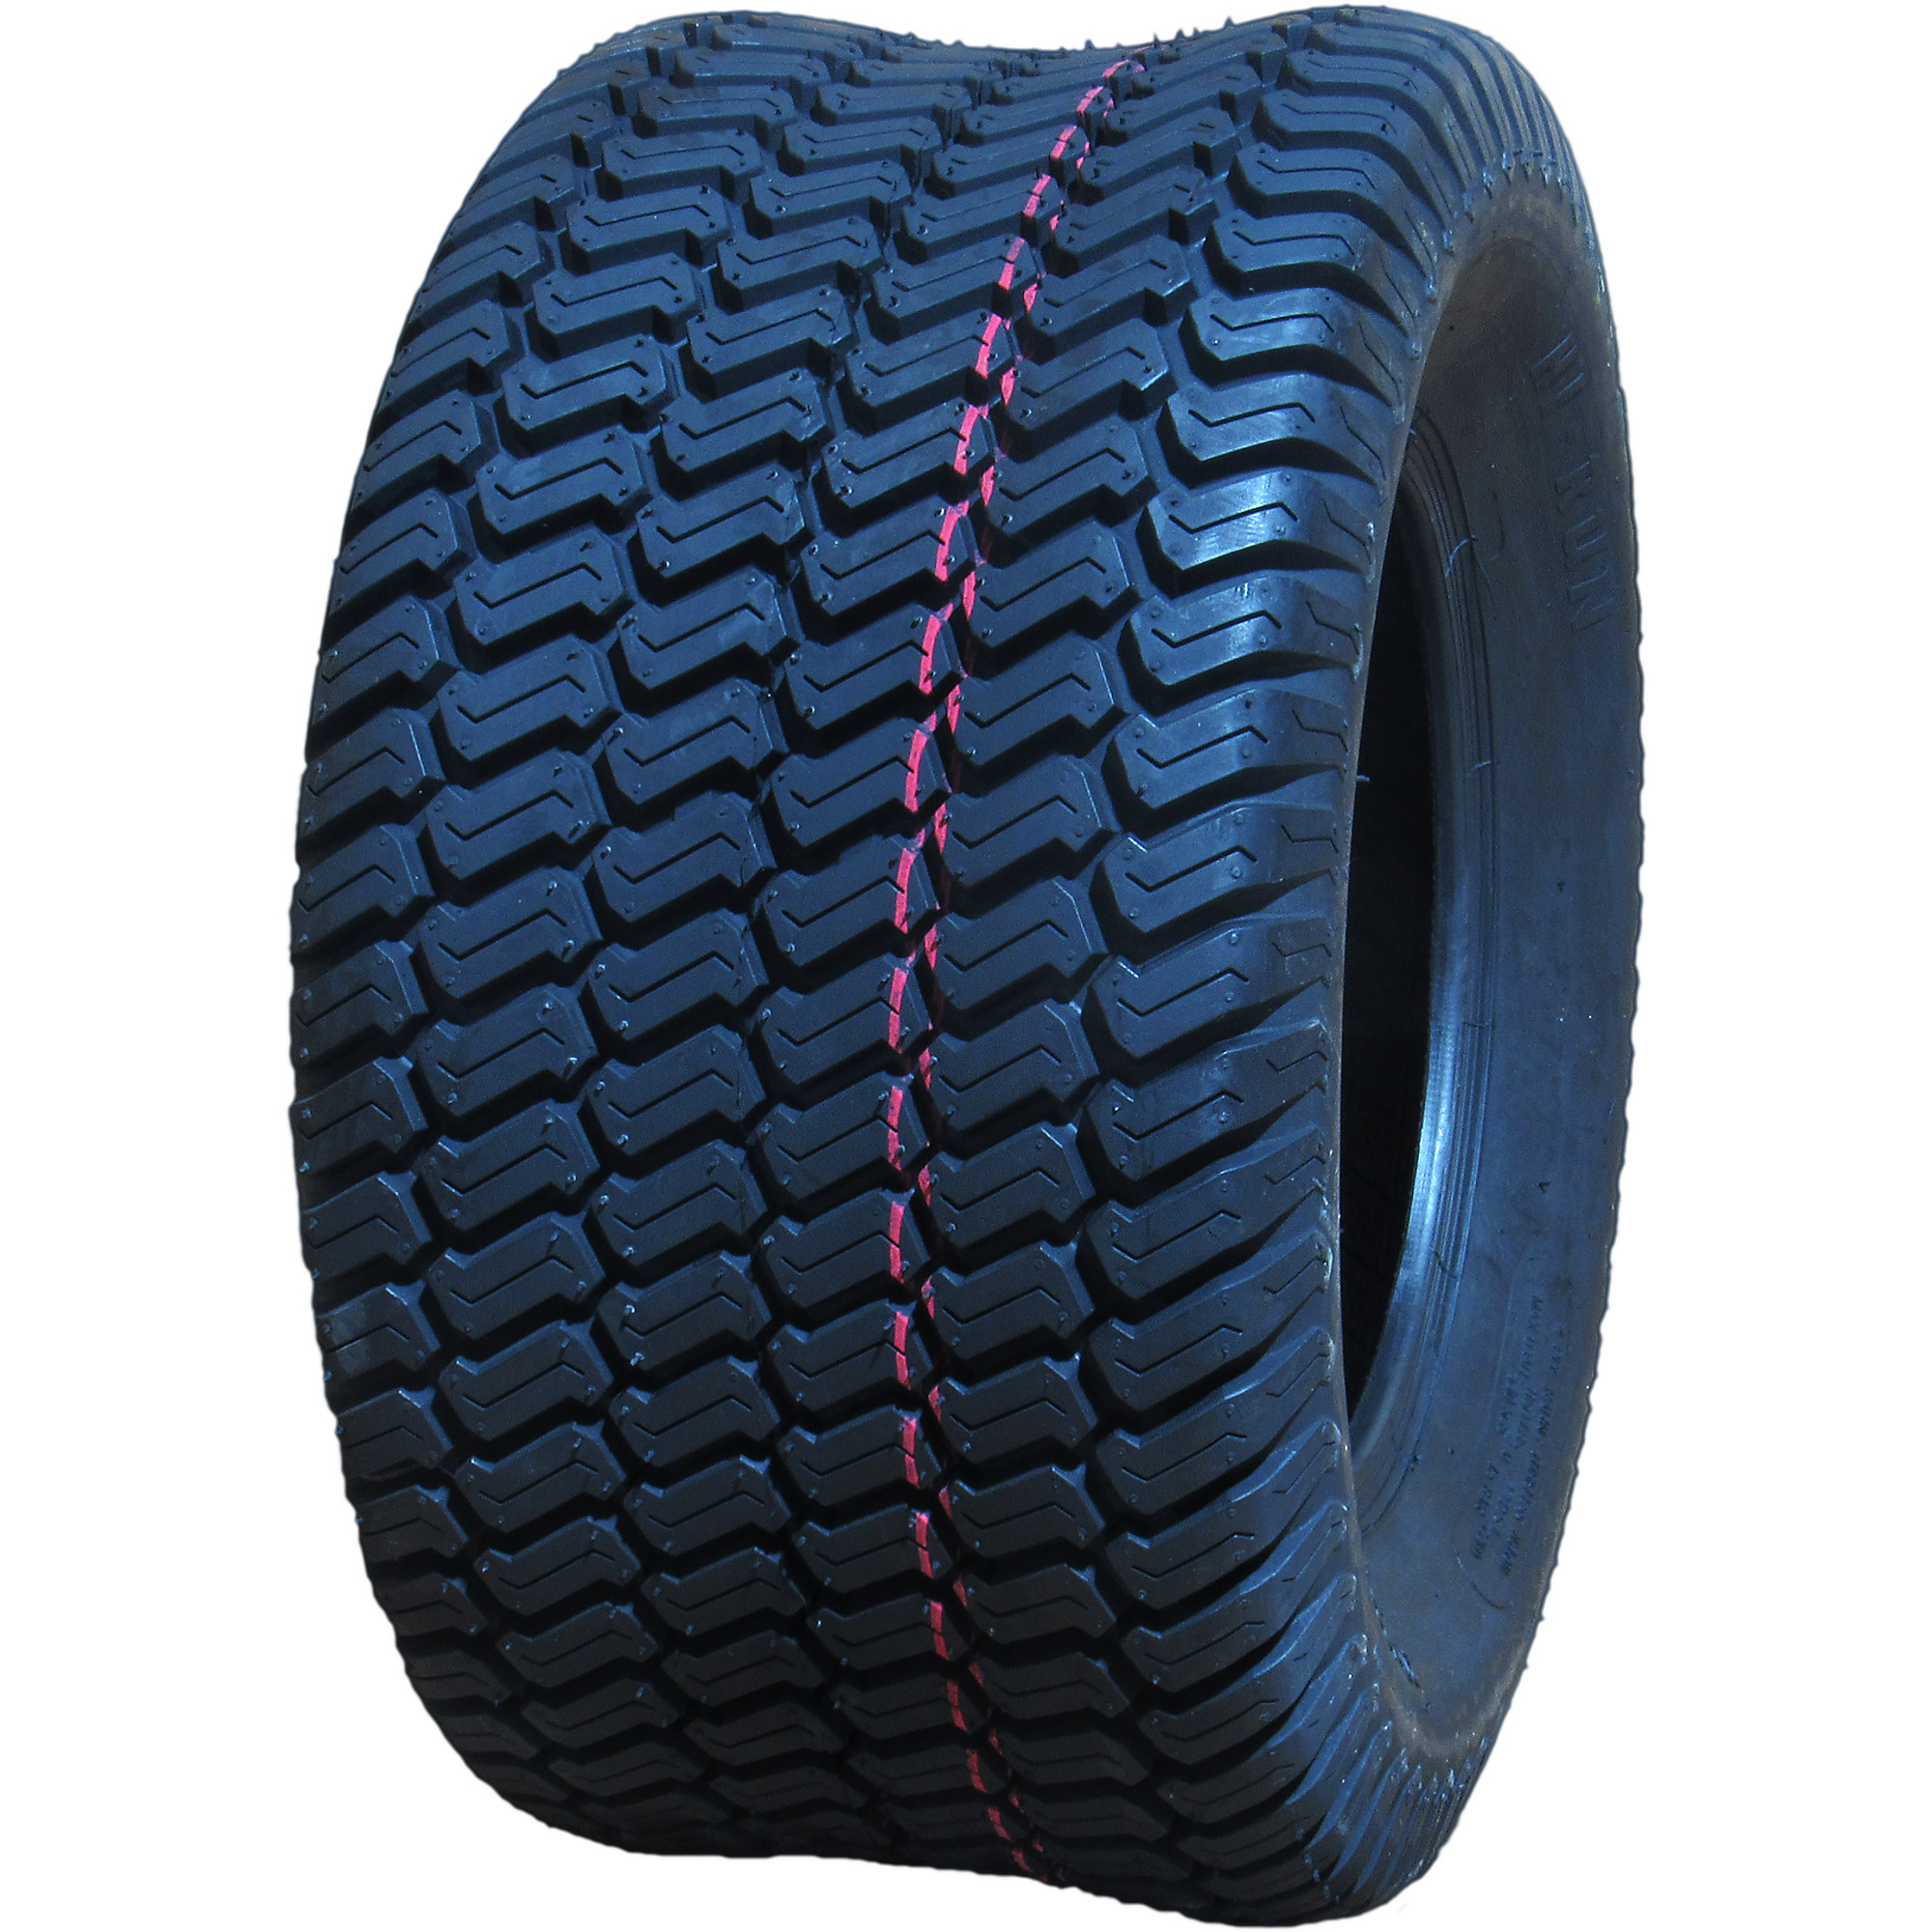 HI-RUN, Lawn Garden Tire, SU05 Turf, Tire Size 20X10.00-10 Load Range Rating B, Model WD1140